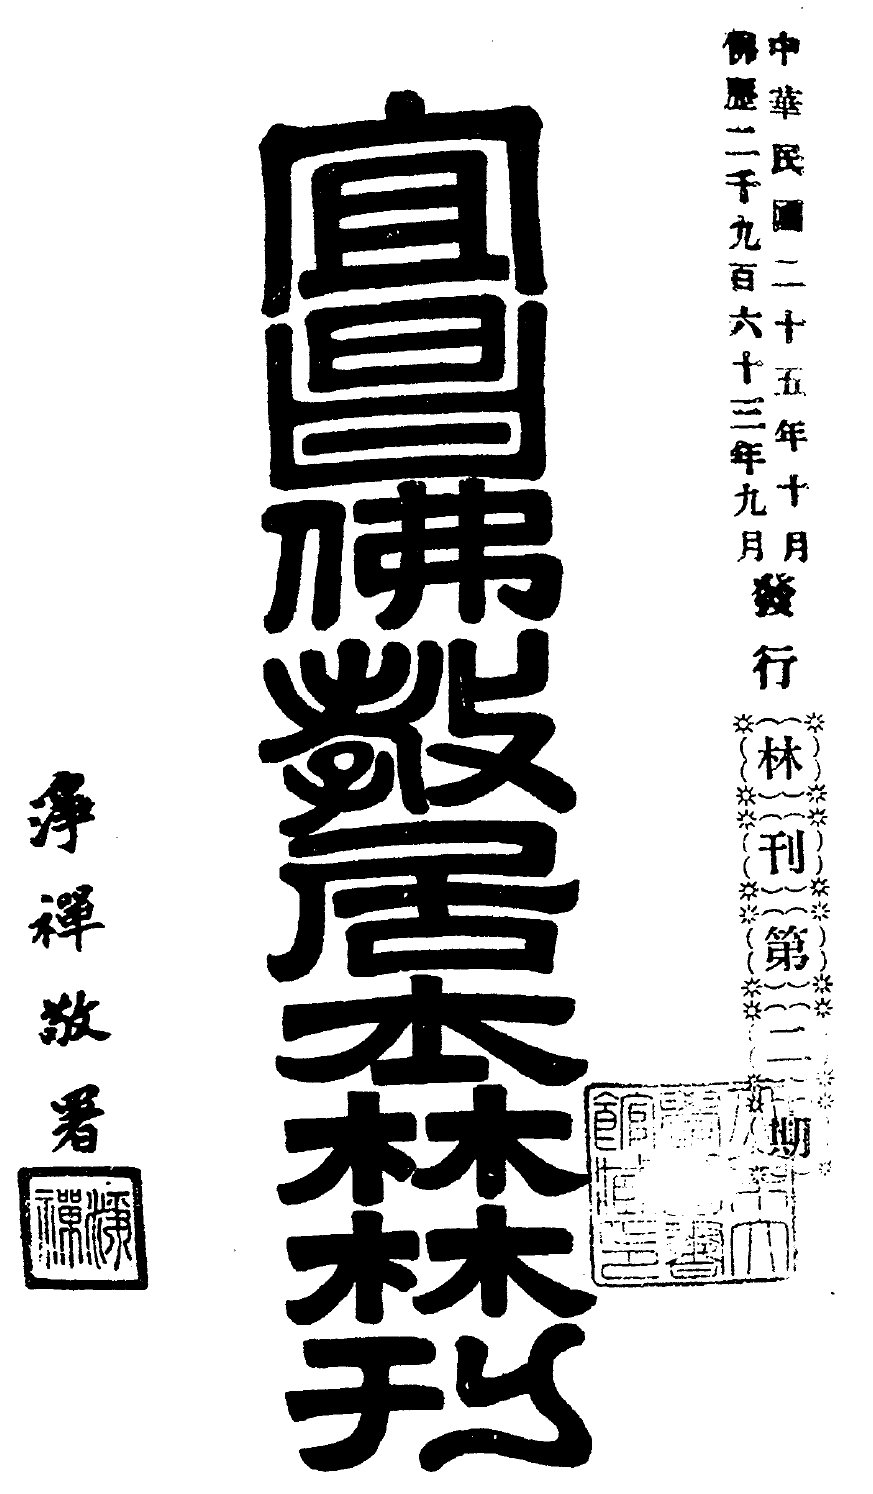 File:Yichang jushilin linkan cover.png